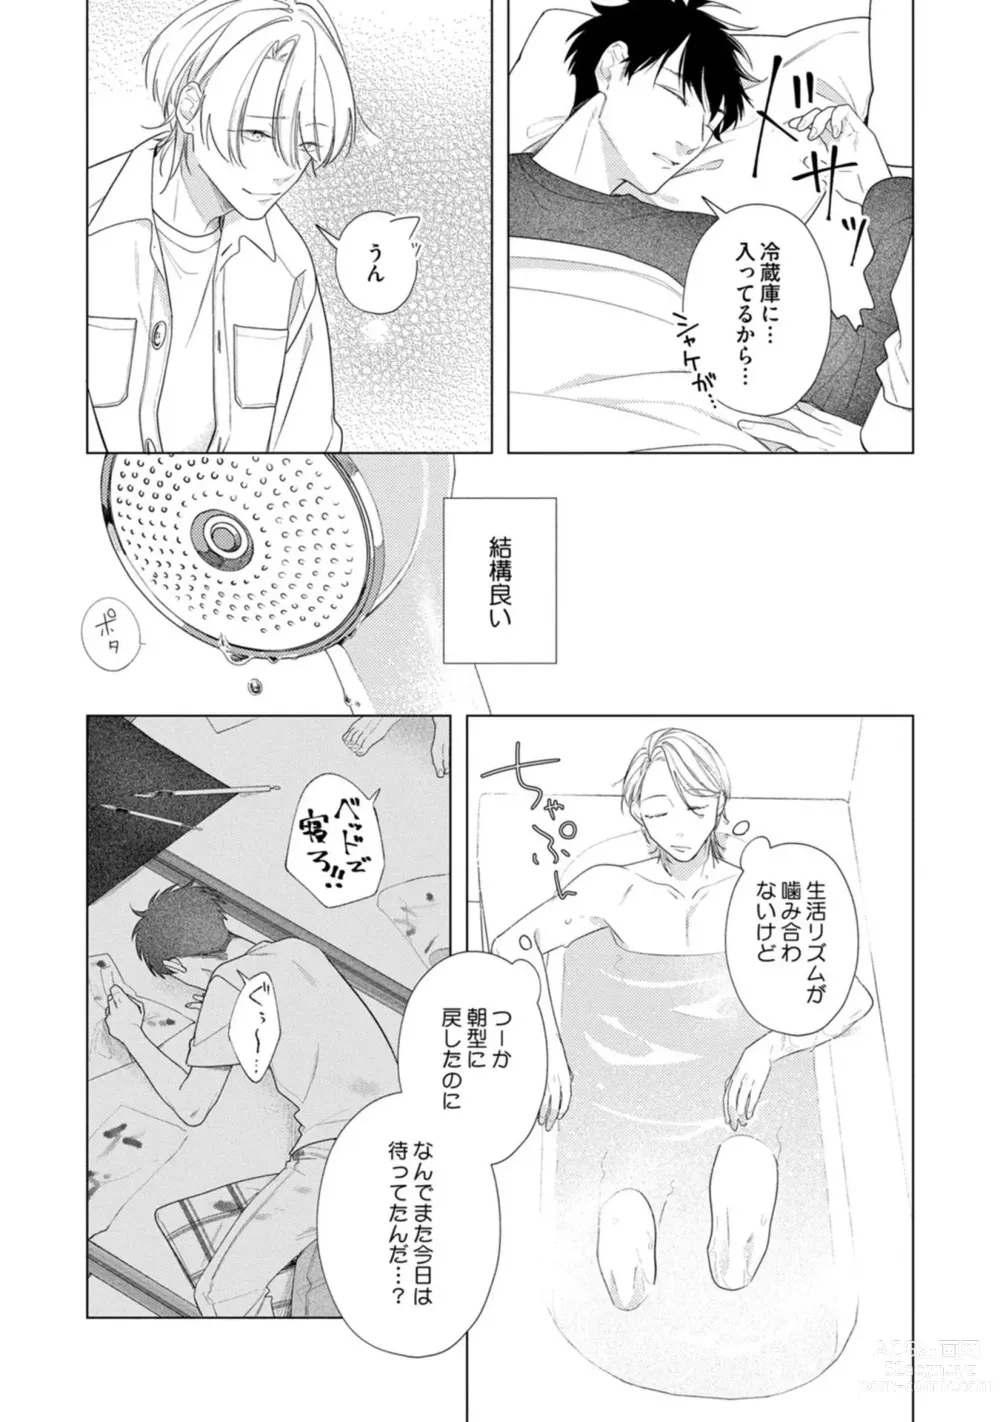 Page 9 of manga Yoru mo, Asa mo